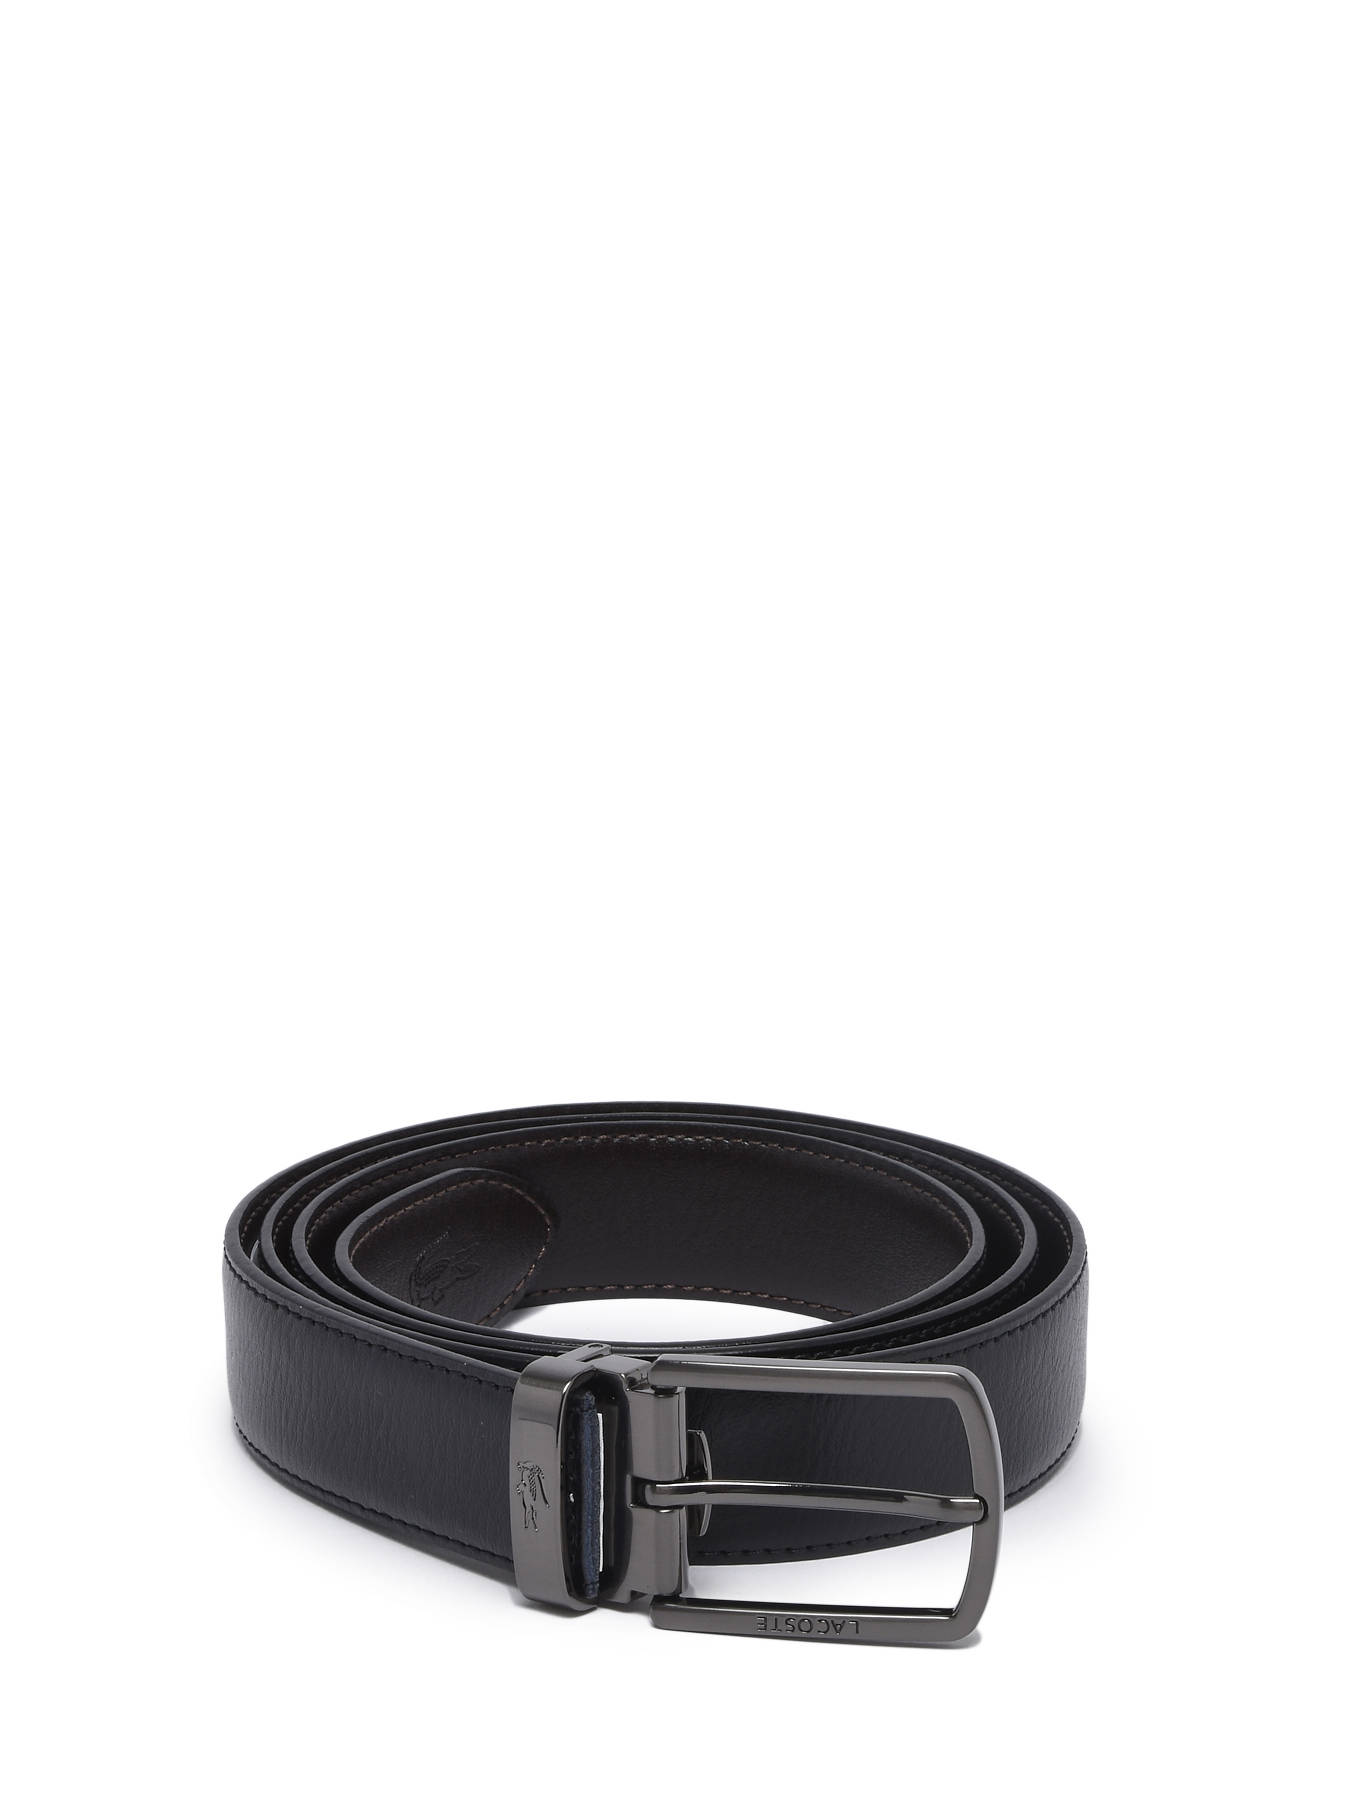 Lacoste Men's belt - best prices